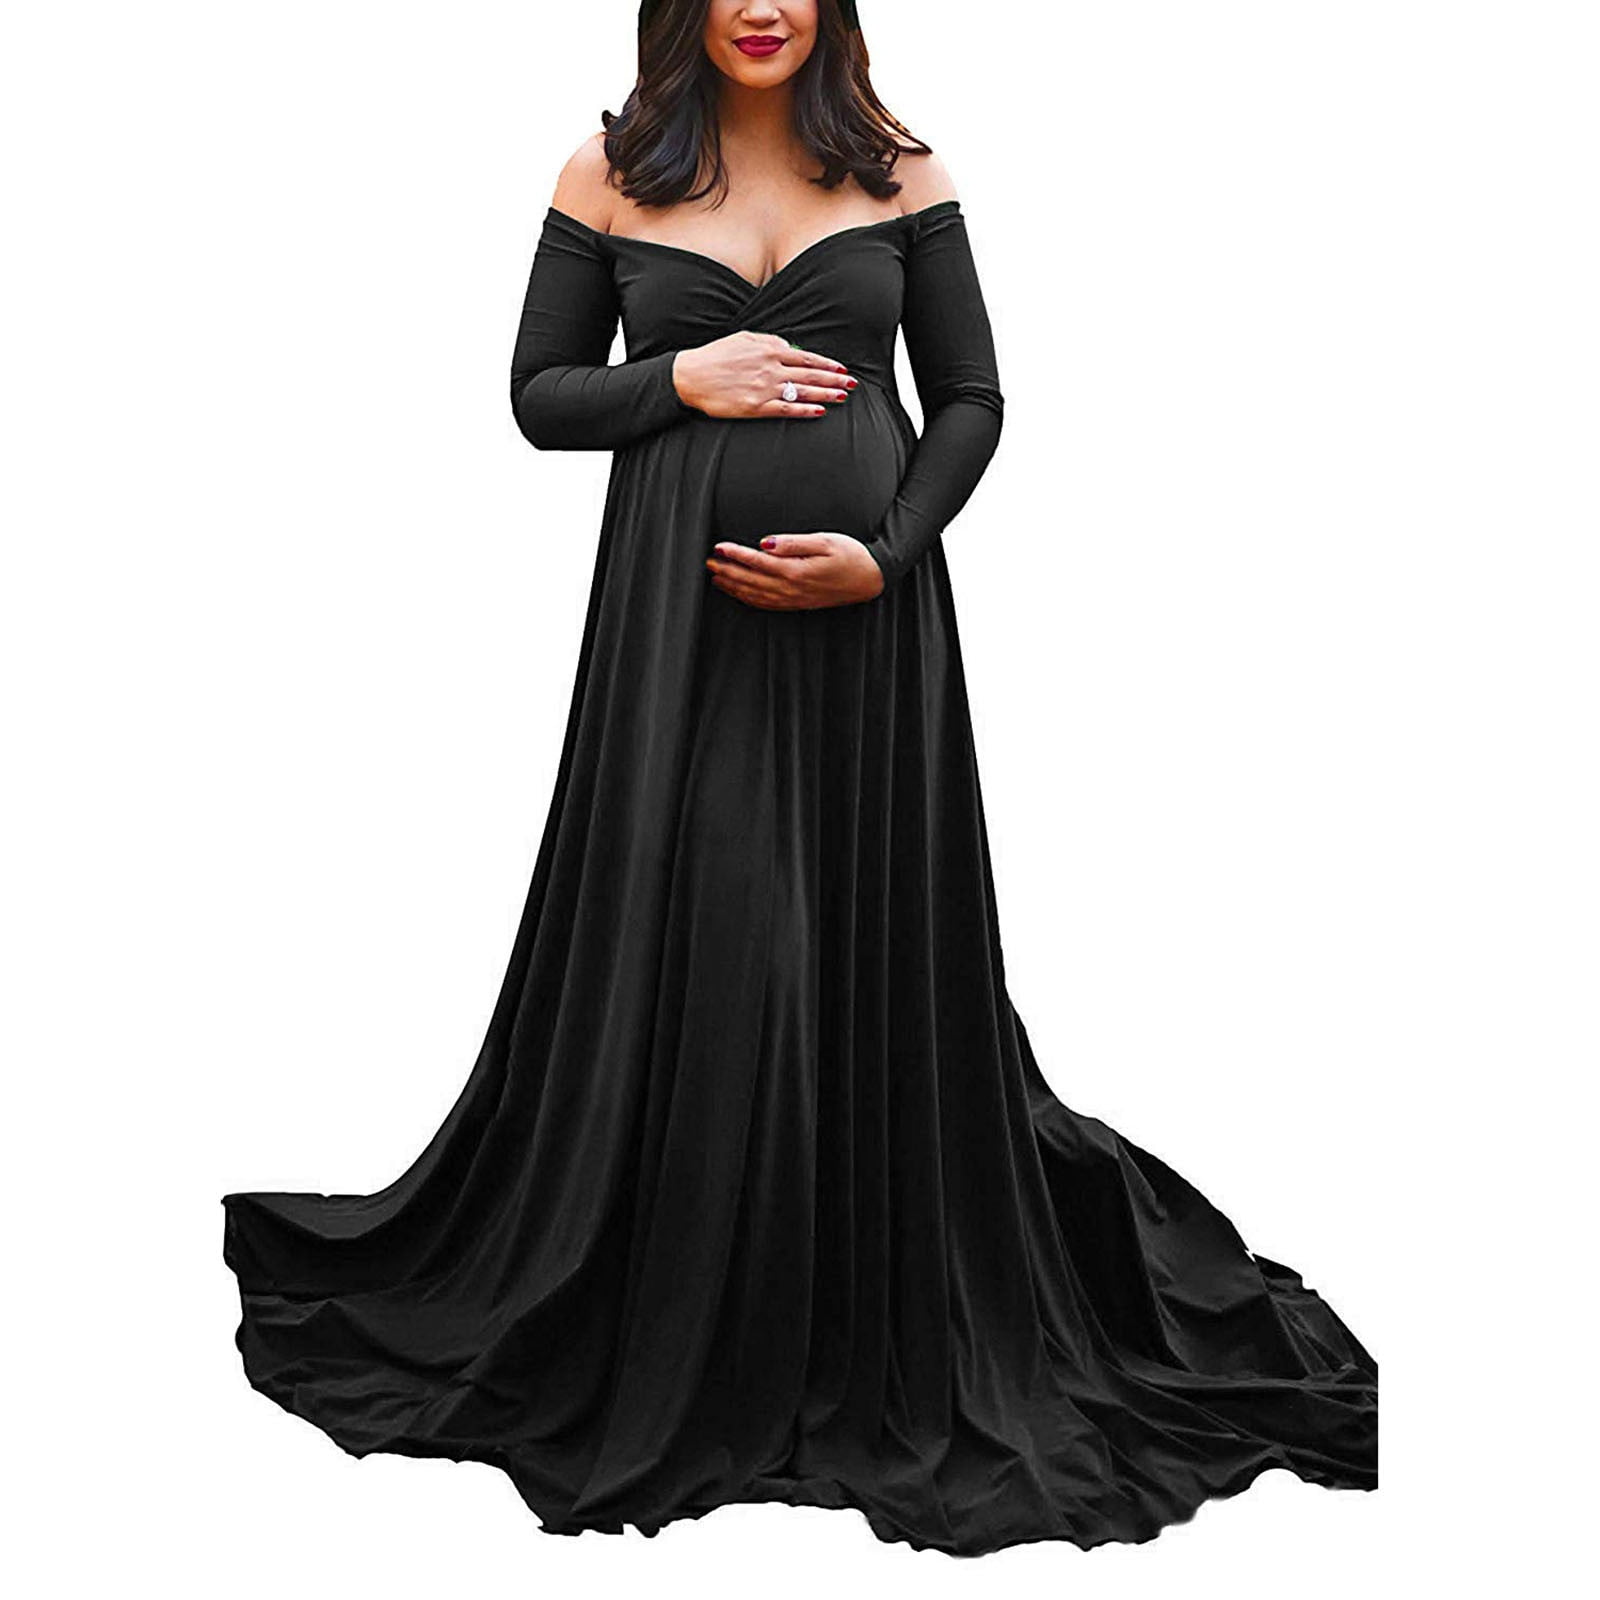 SMALL Maternity Dress NEW a glow Knot Black Full Length Maxi Kohls  Pregnancy NWT